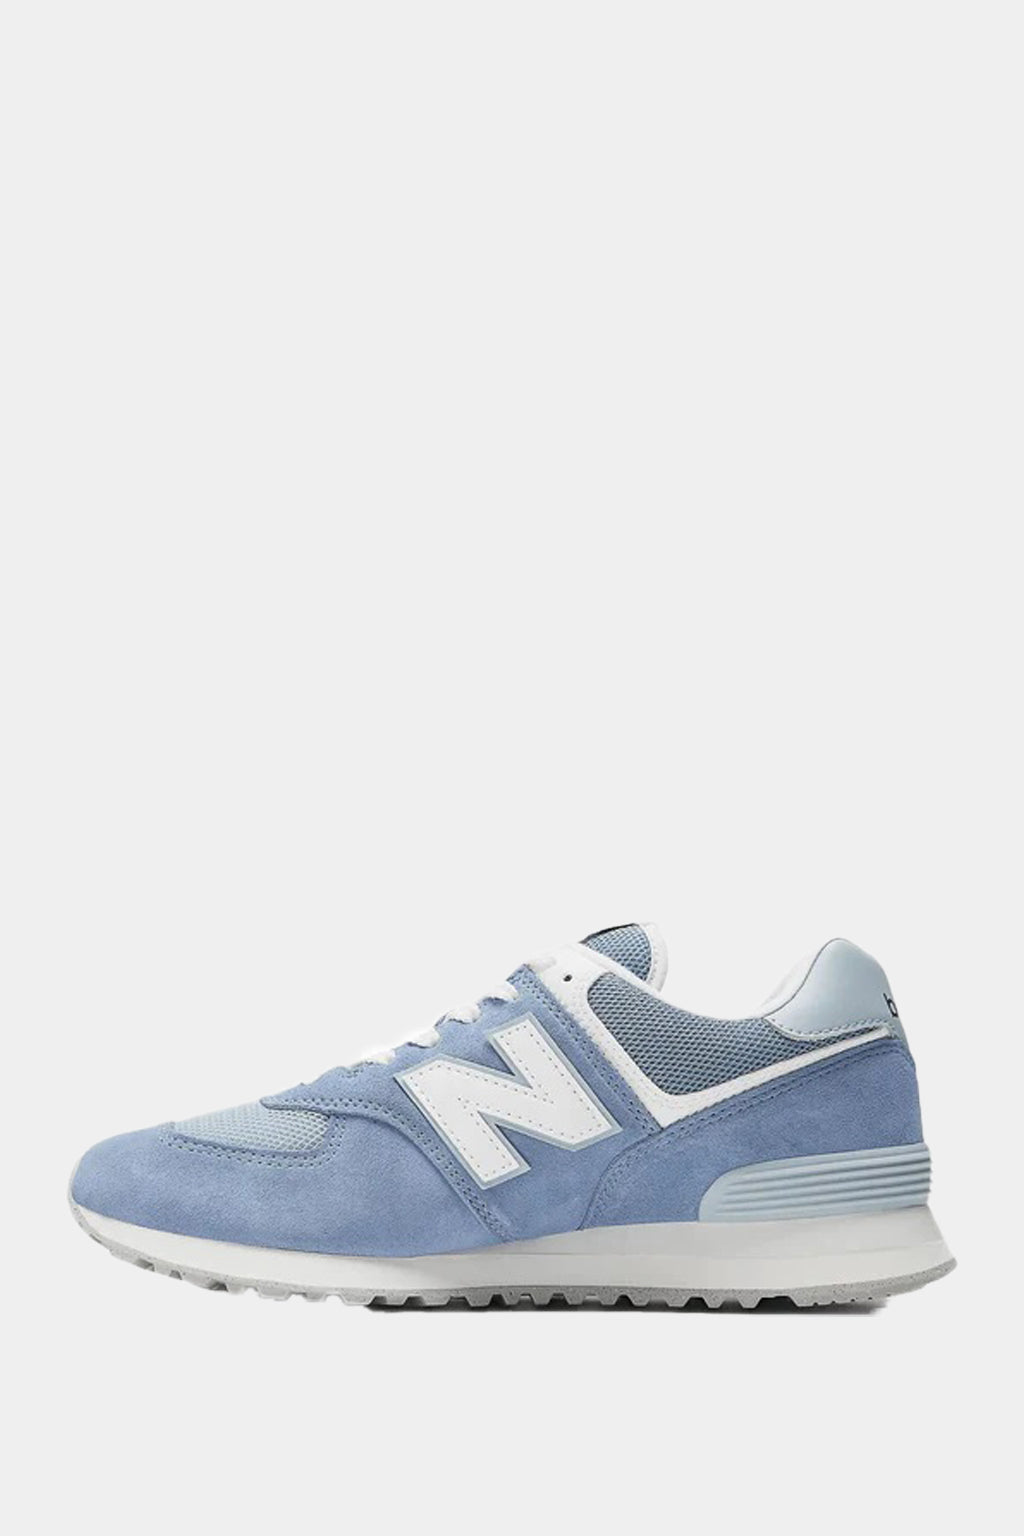 New Balance - 574 Shoe